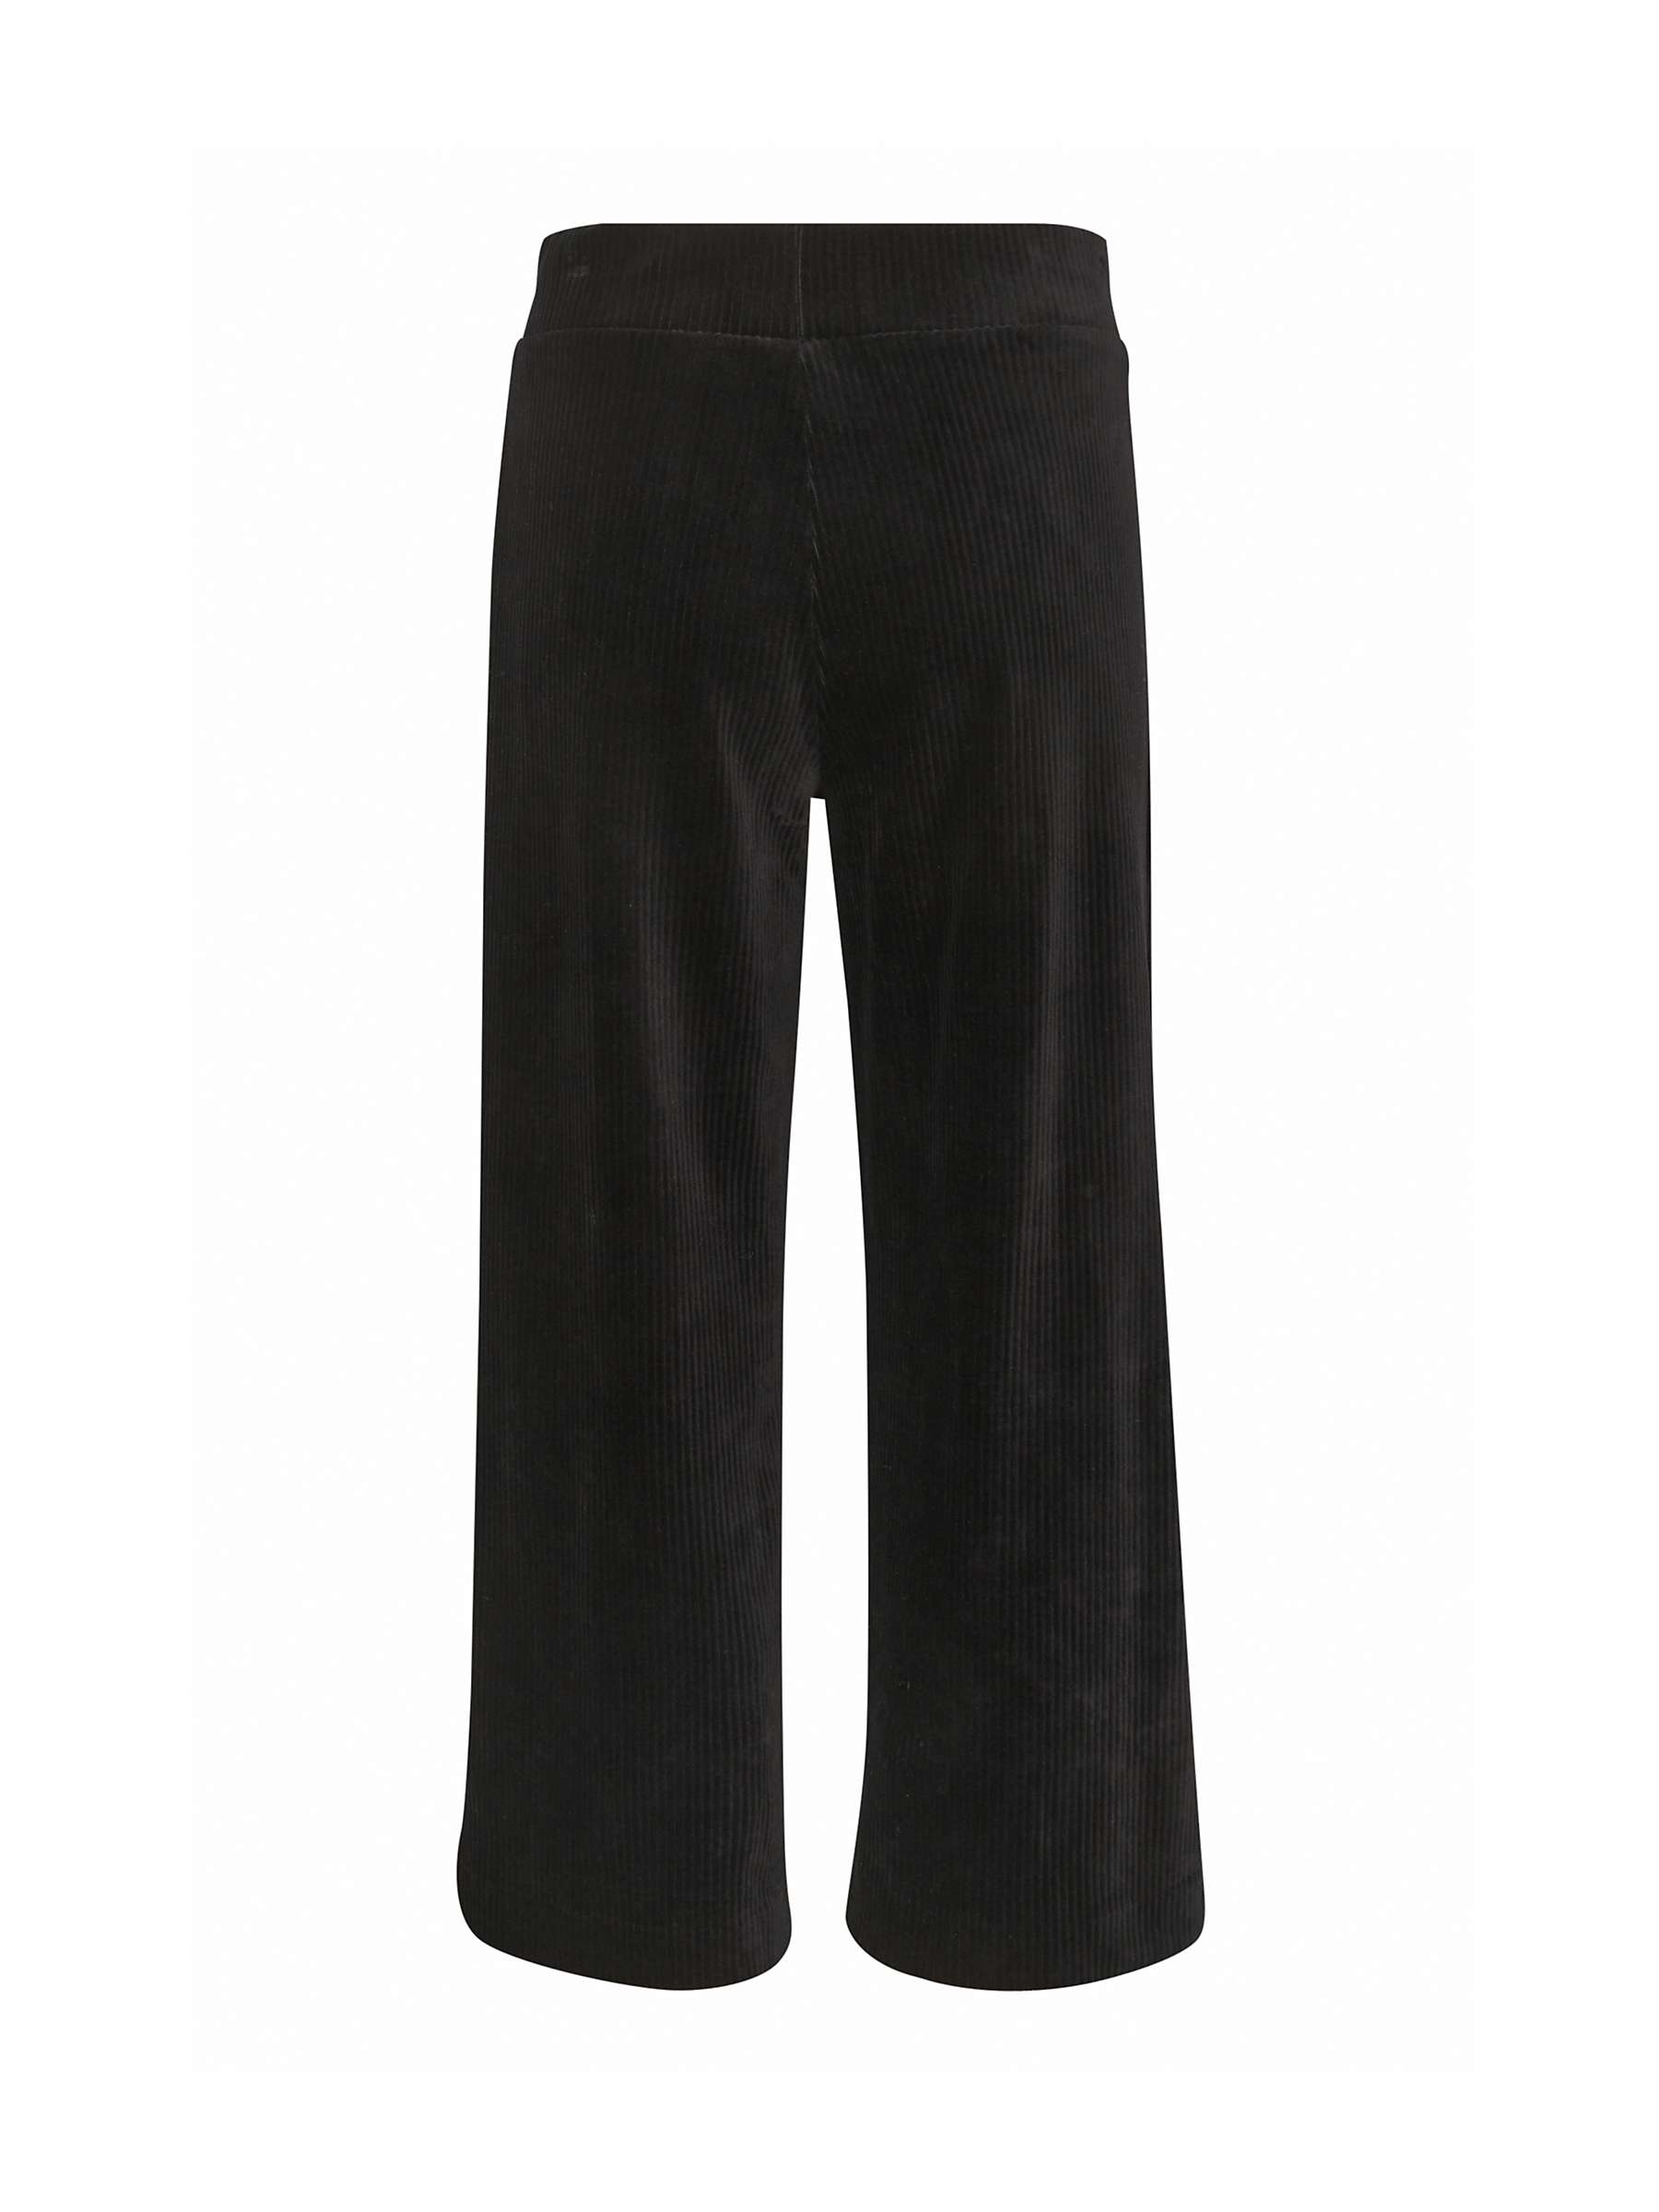 Buy Part Two Illisanna Corduroy Trousers, Black Online at johnlewis.com